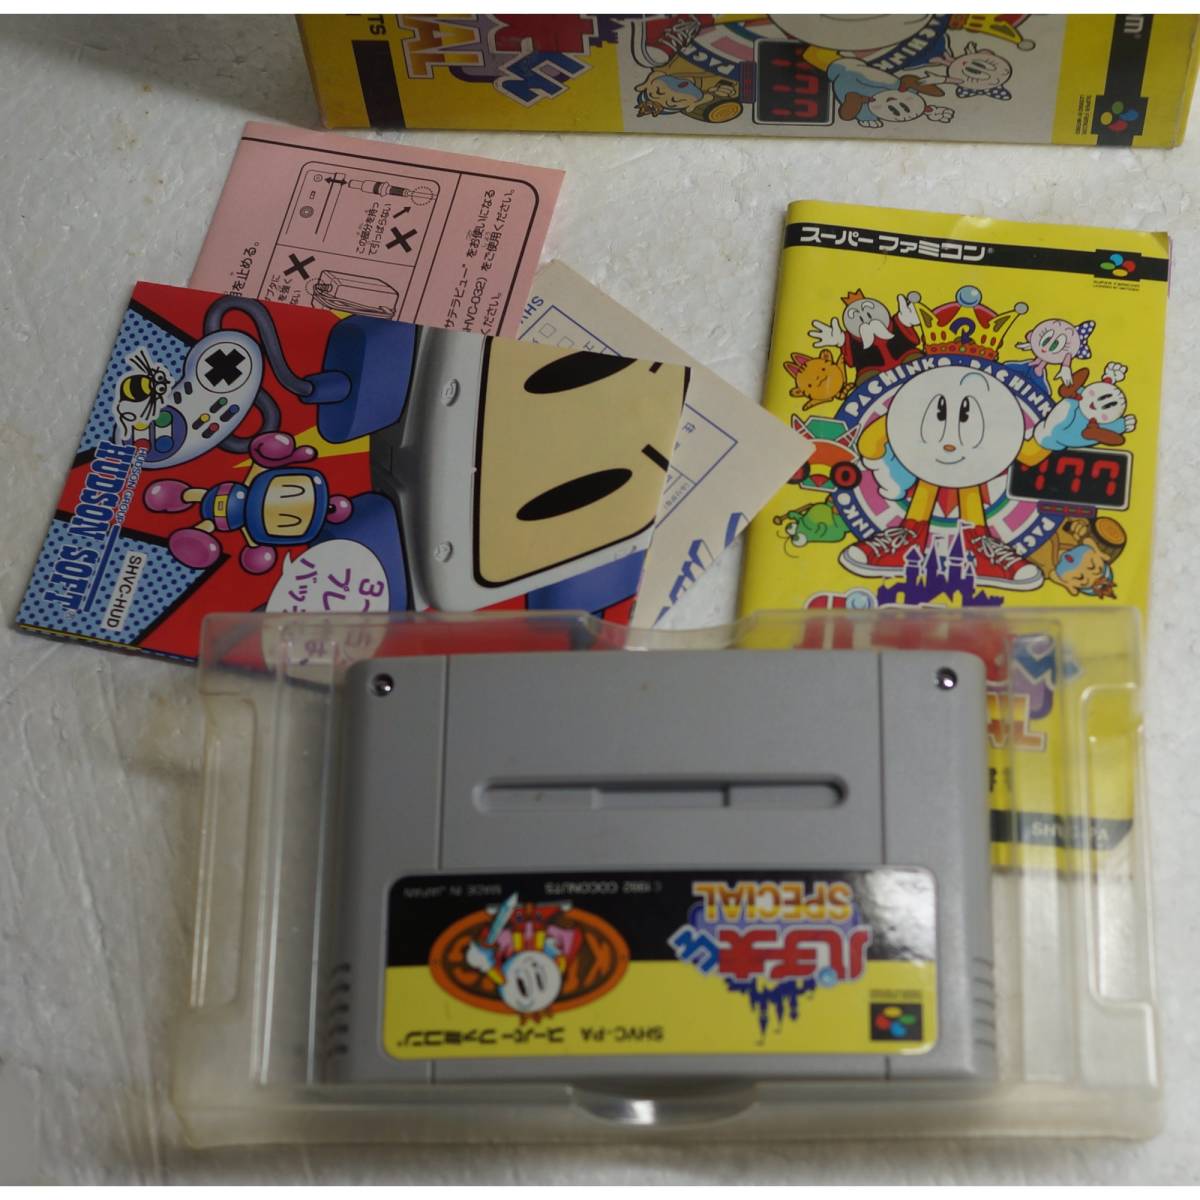  Pachi Хара kun SPECIAL SHVC-PA Super Famicom игра 